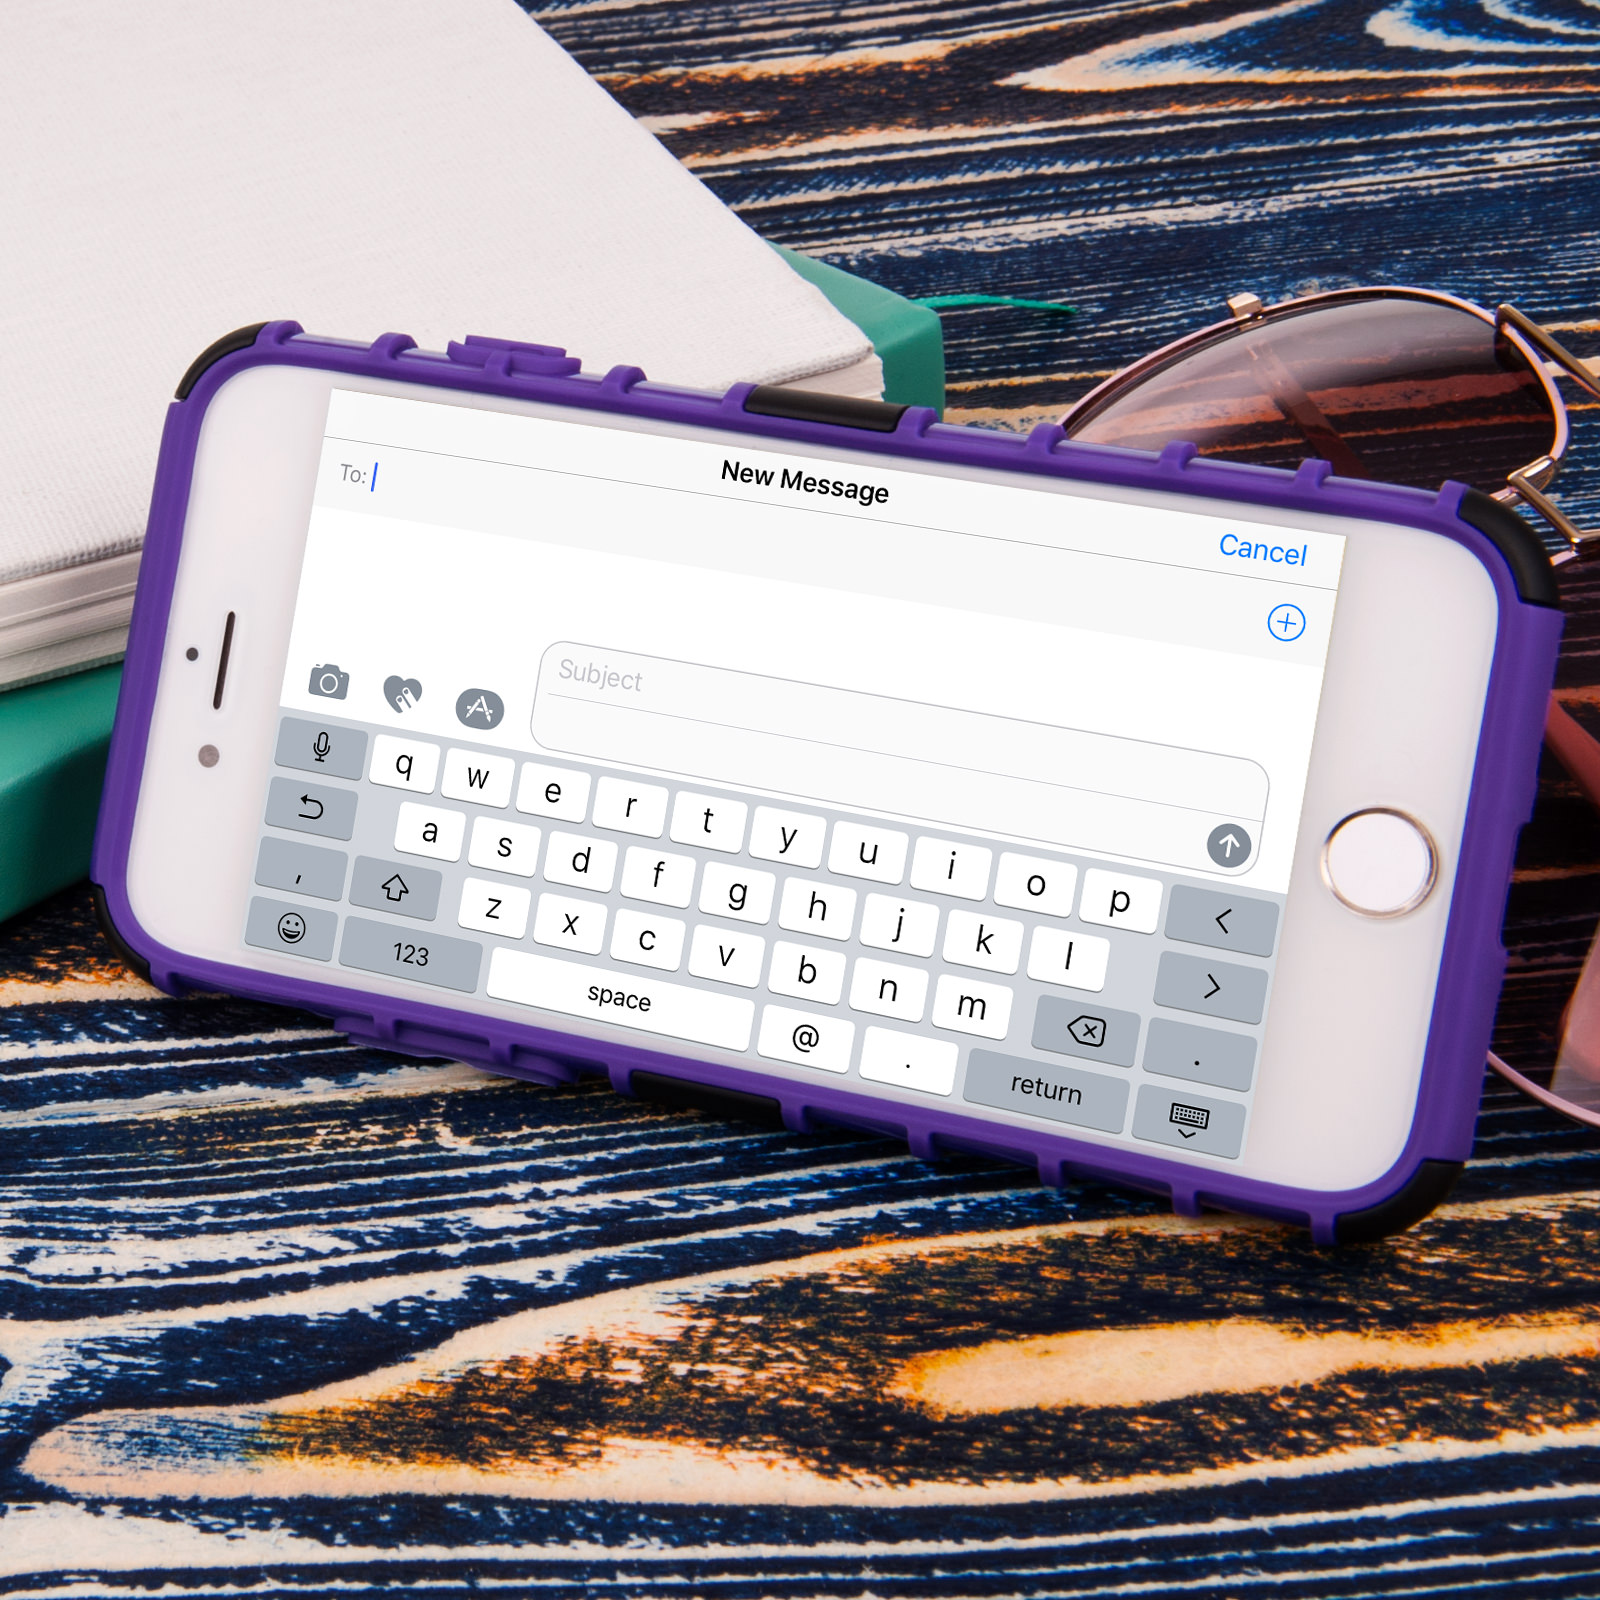 YouSave iPhone 7 Kickstand Combo Case - Purple